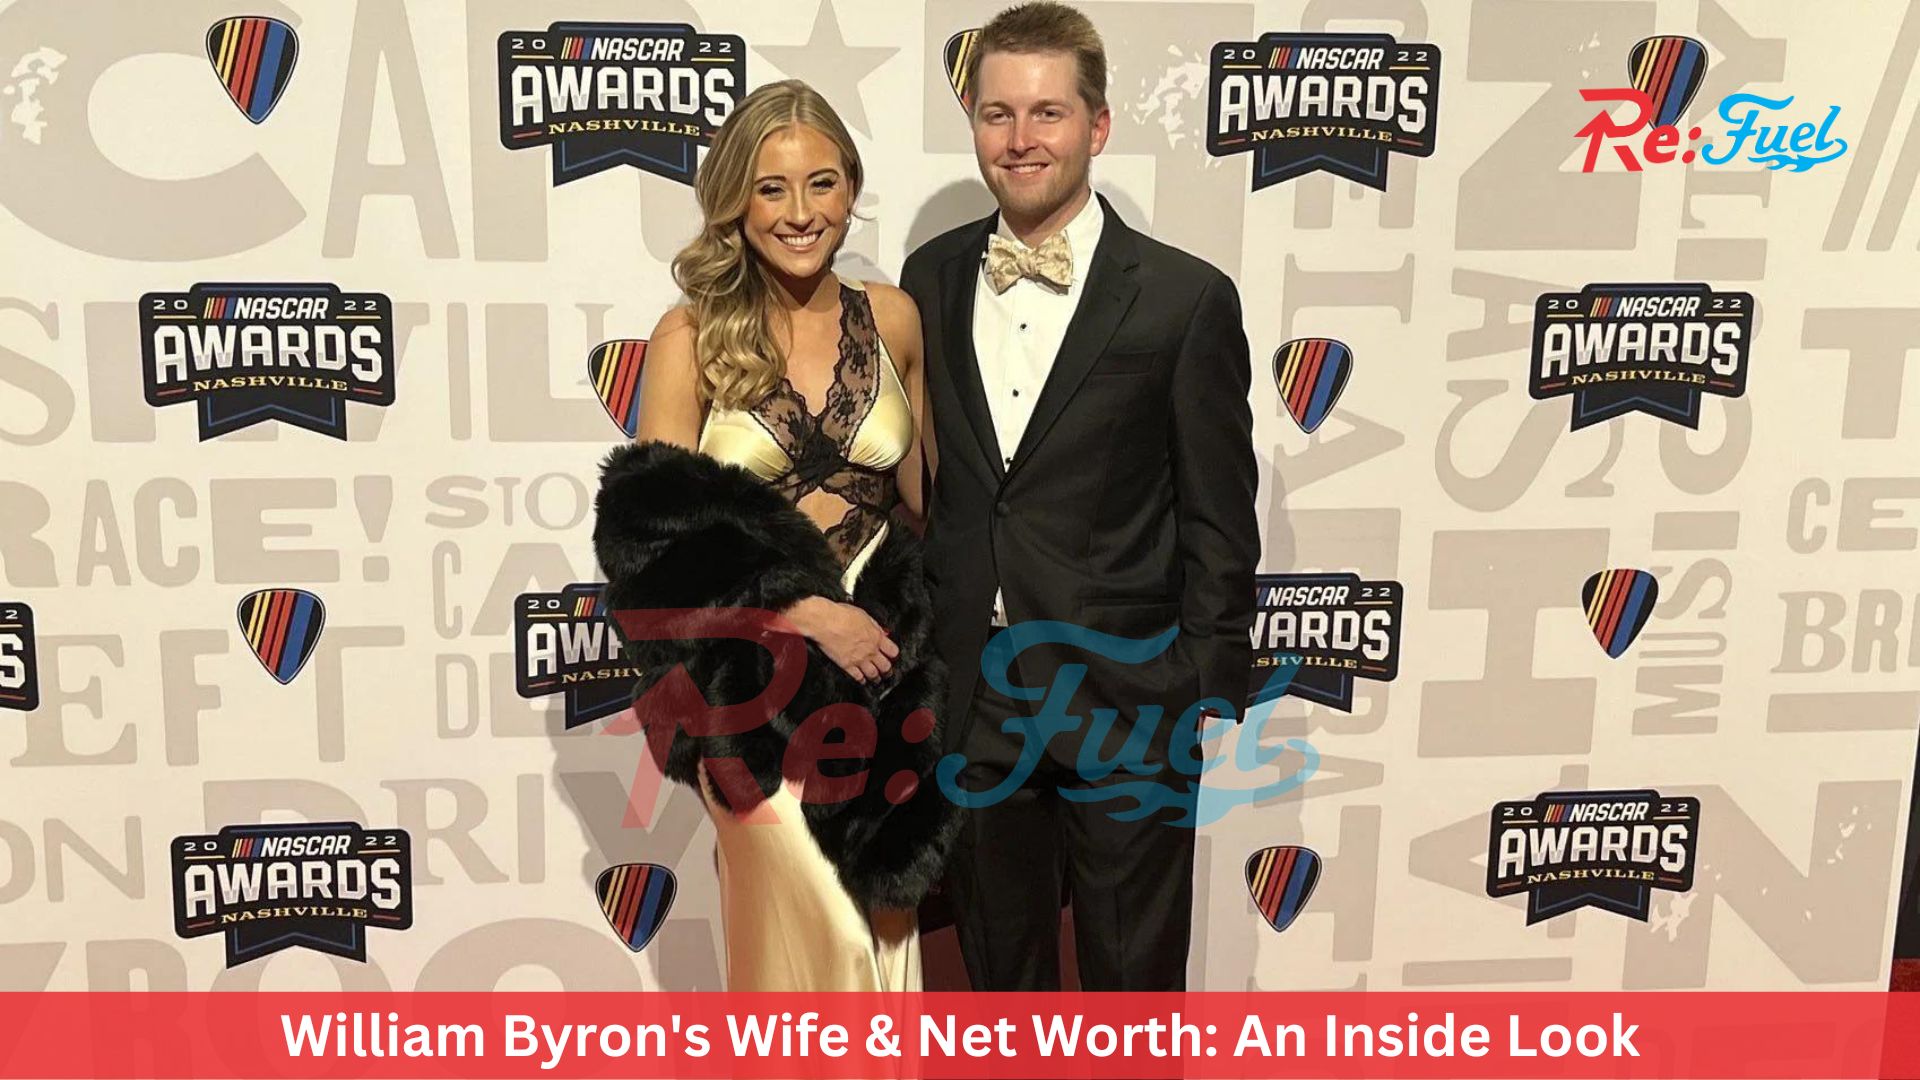 William Byron's Wife & Net Worth: An Inside Look